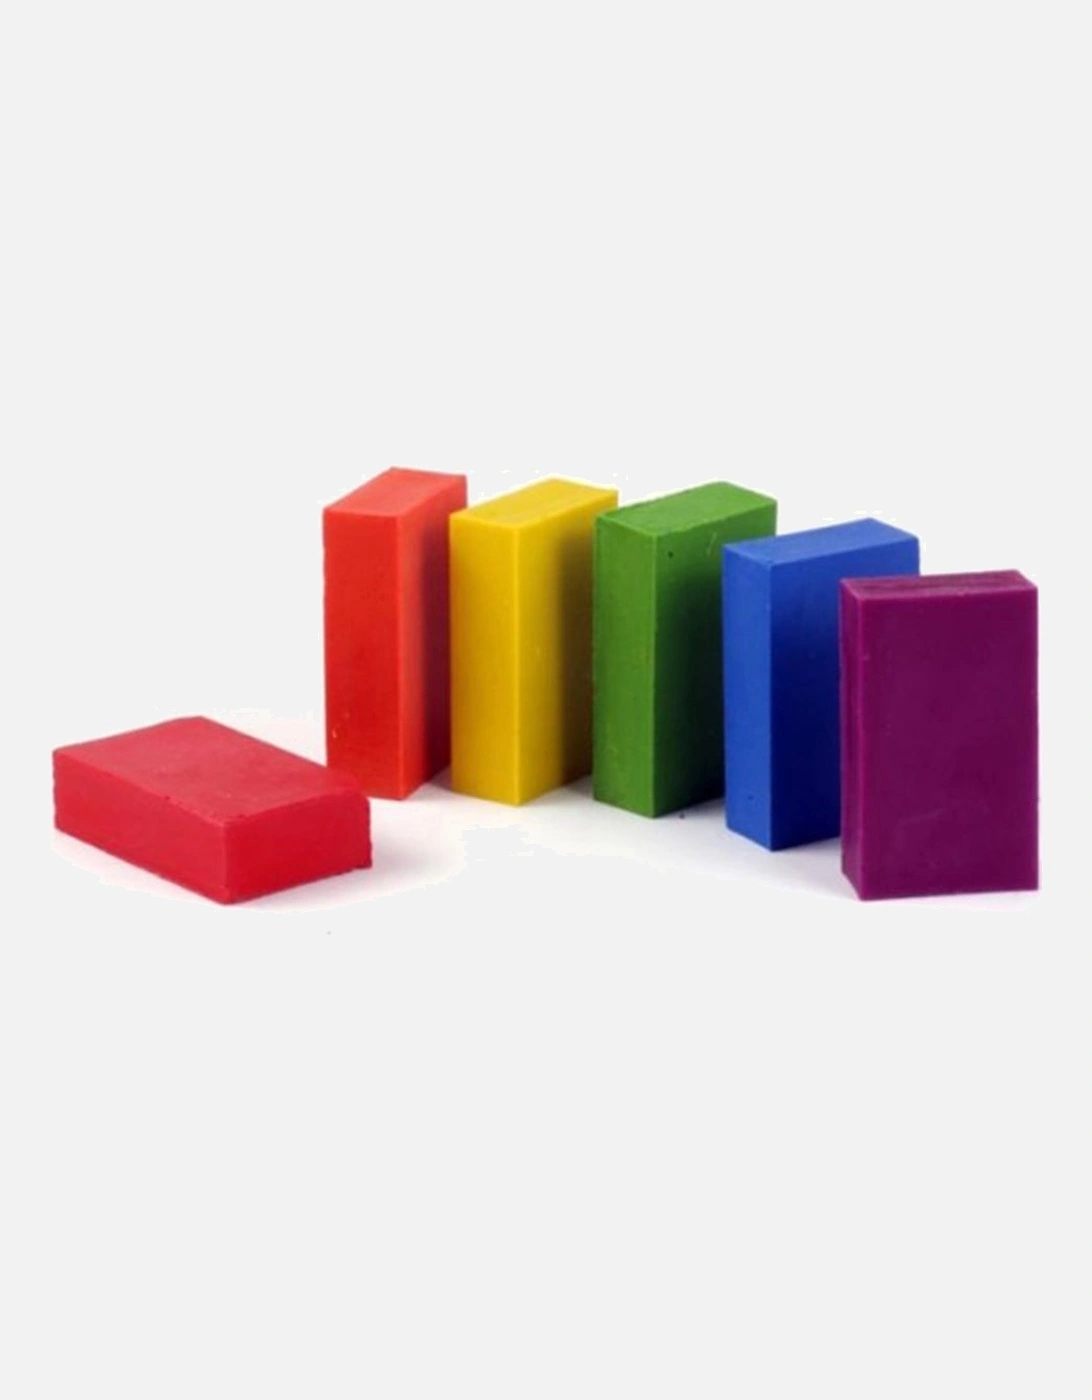 okoNORM Nawaro Wax Blocks "Unicorn" 6 Colour Pack